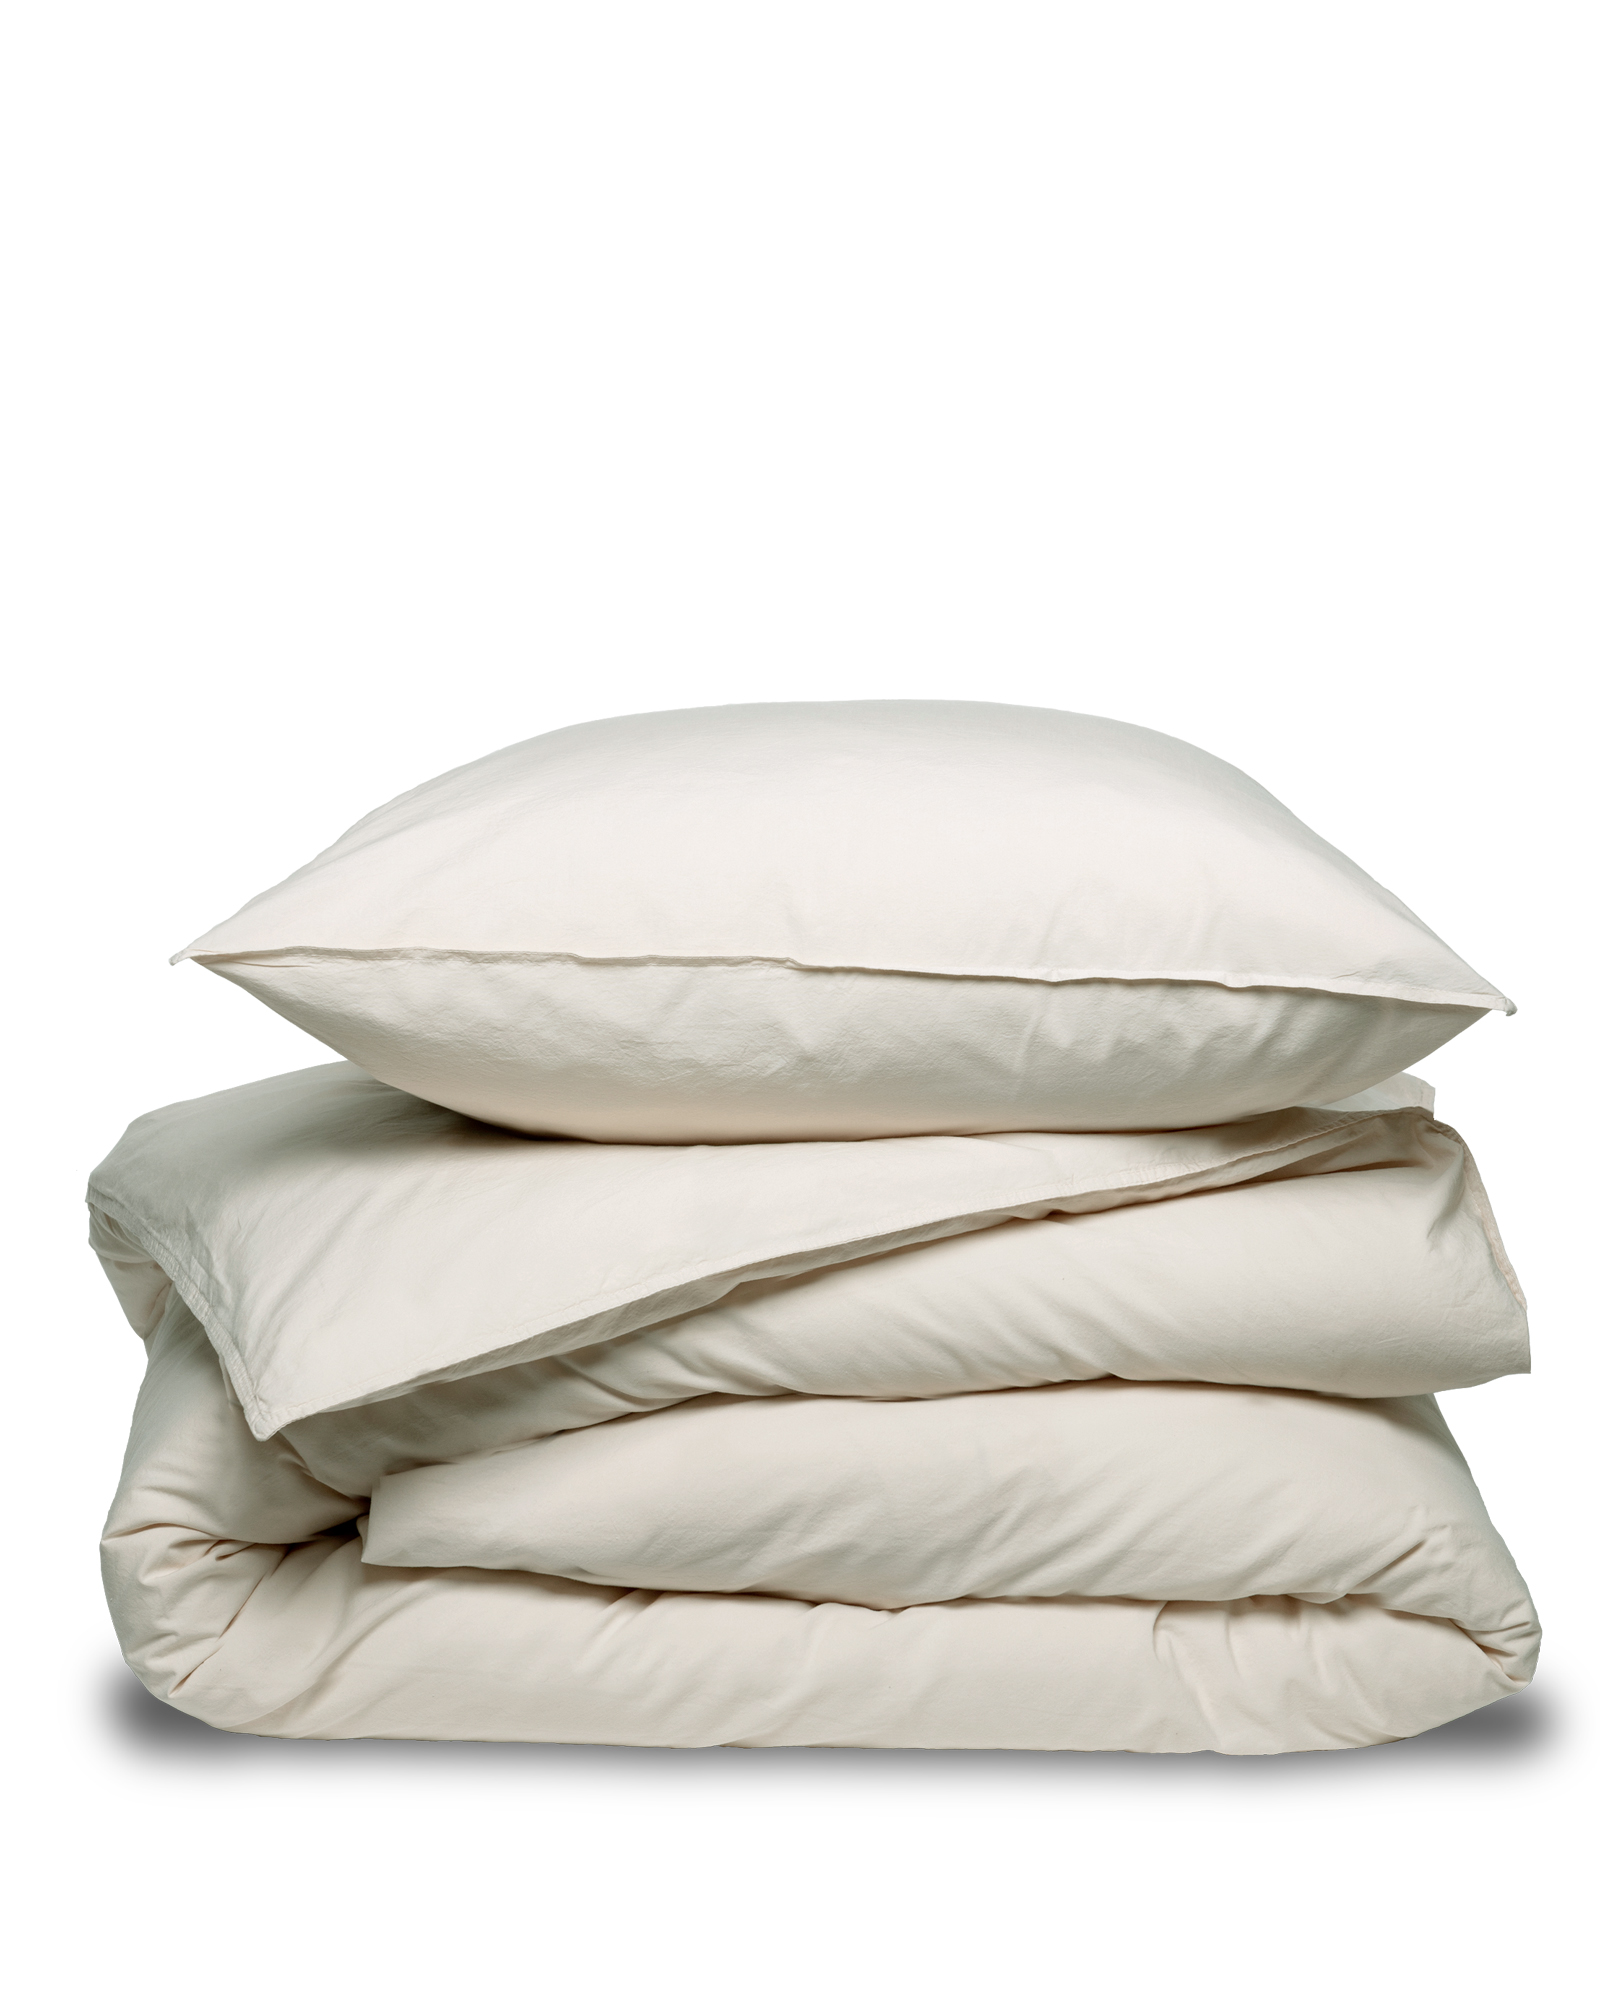 MARIE-MARIE - Pillowcase VINTAGE COTTON Oatmeal - 50x75 cm - Oatmeal